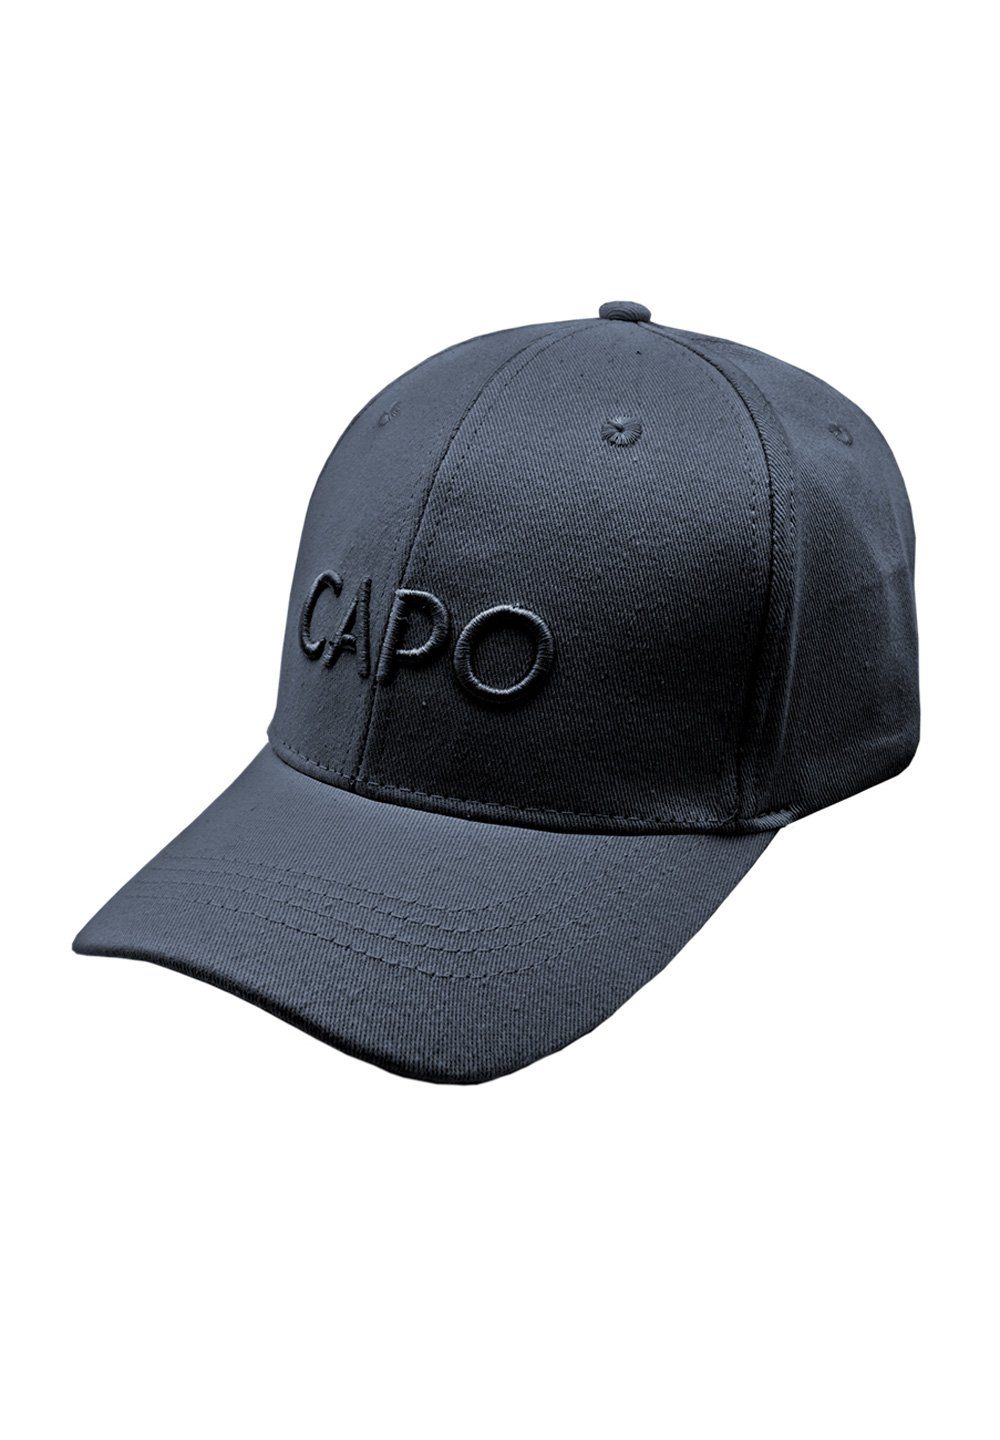 CAPO Baseball Cap Baseballcap 3D-Stickerei, 6 Panel navy